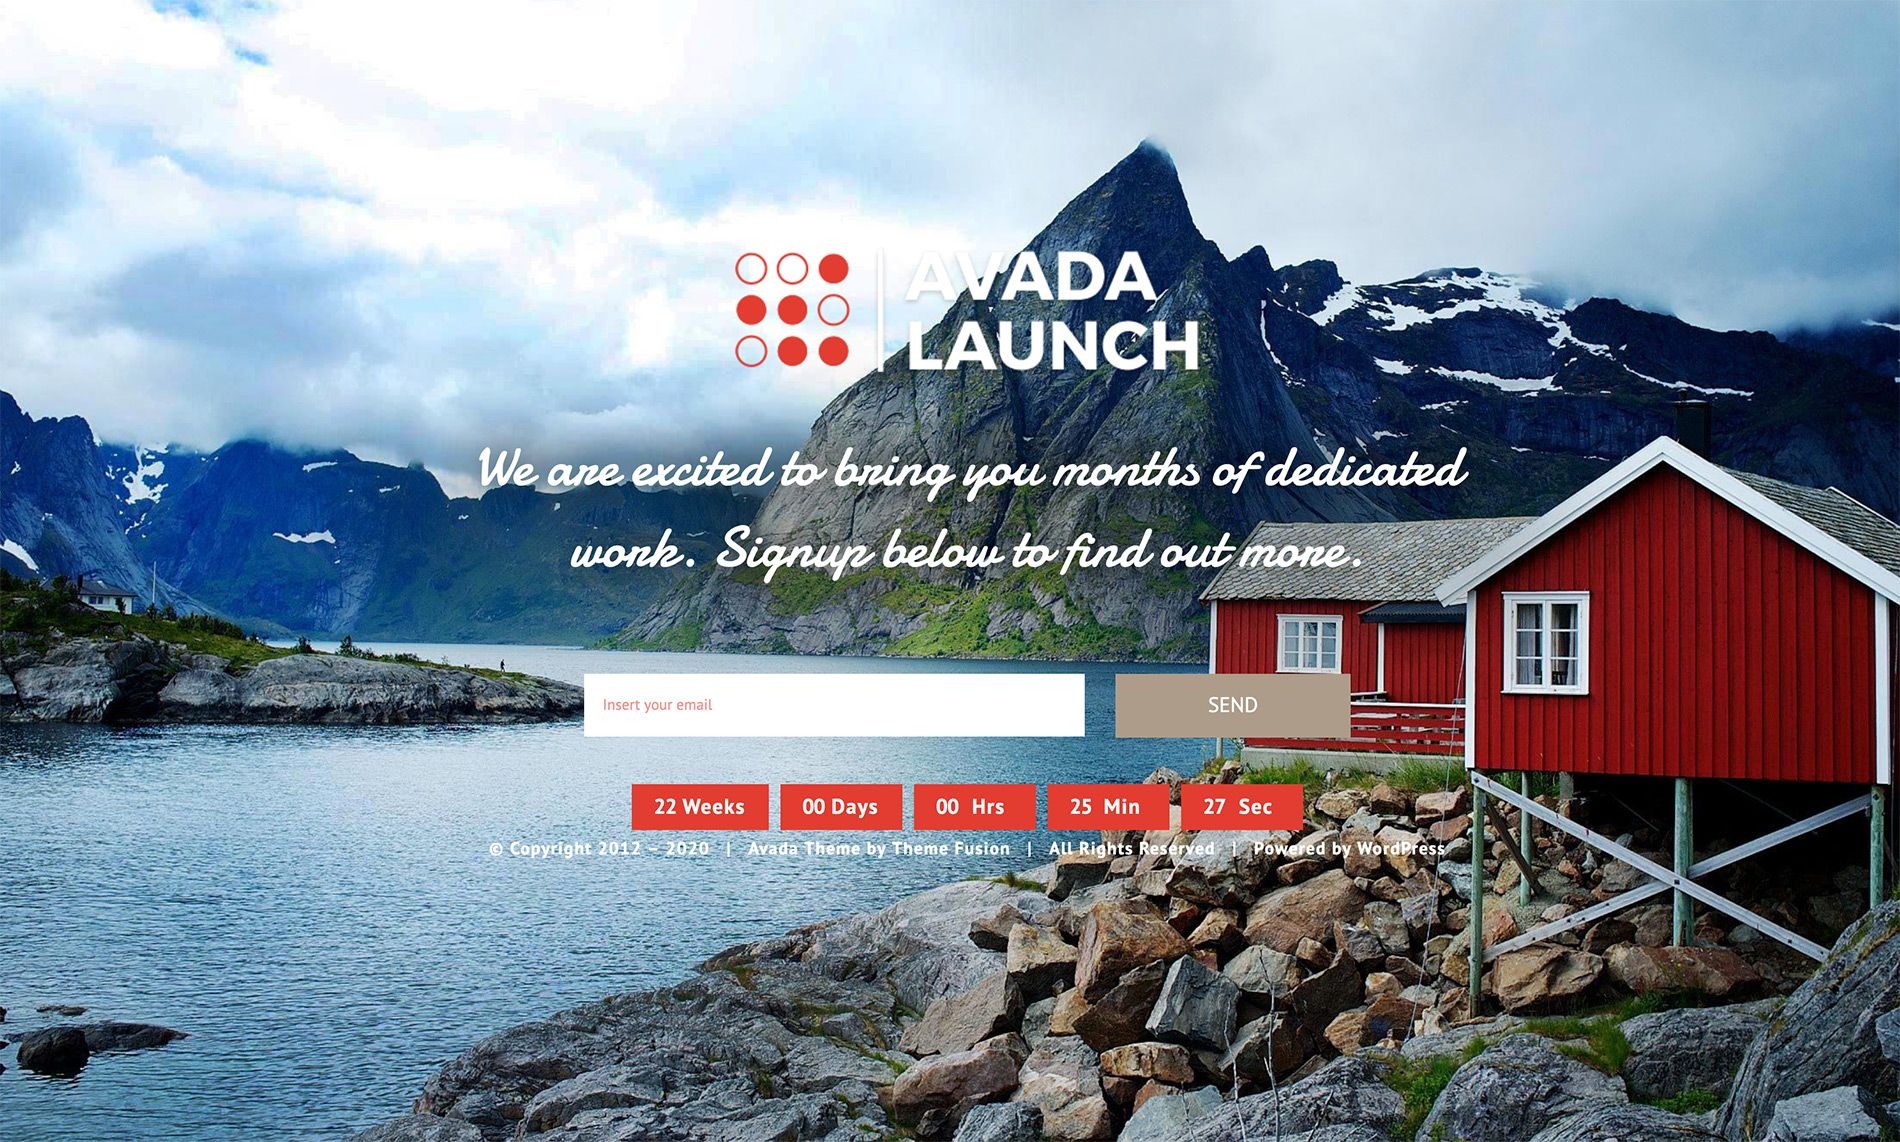 Avada Launch